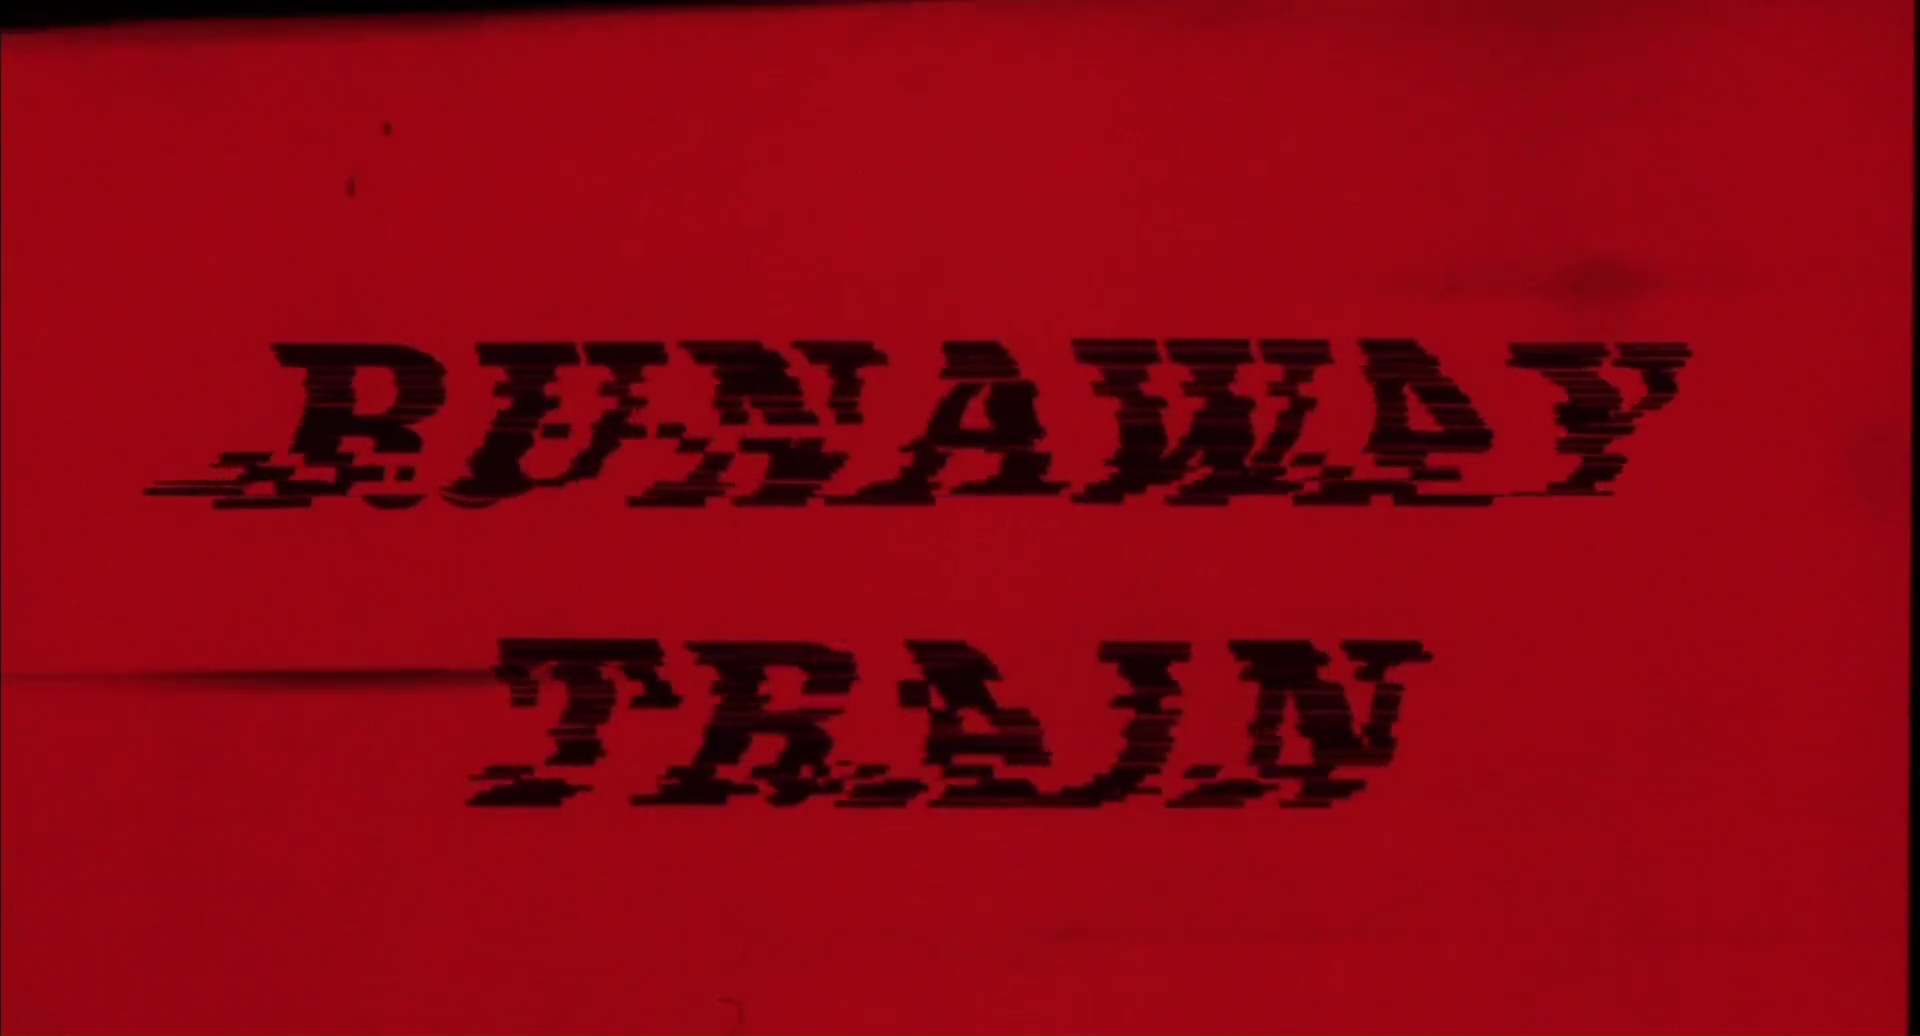 [Film] Runaway Train, de Andrei Konchalovsky (1985)